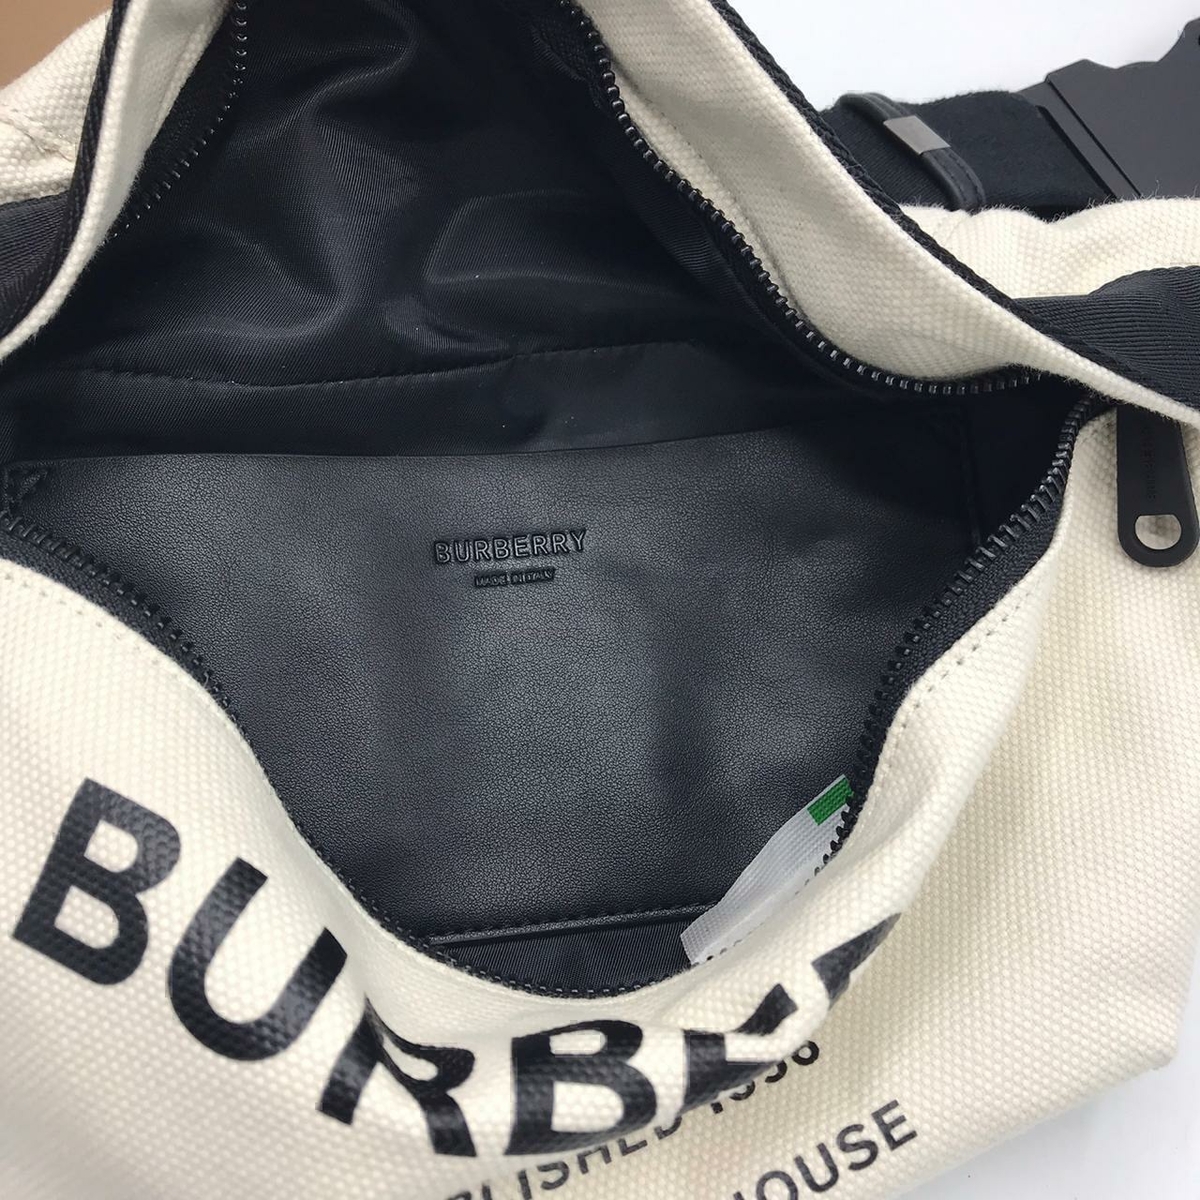 Burberry сумка #1 в «Globestyle» арт.7286ZZ